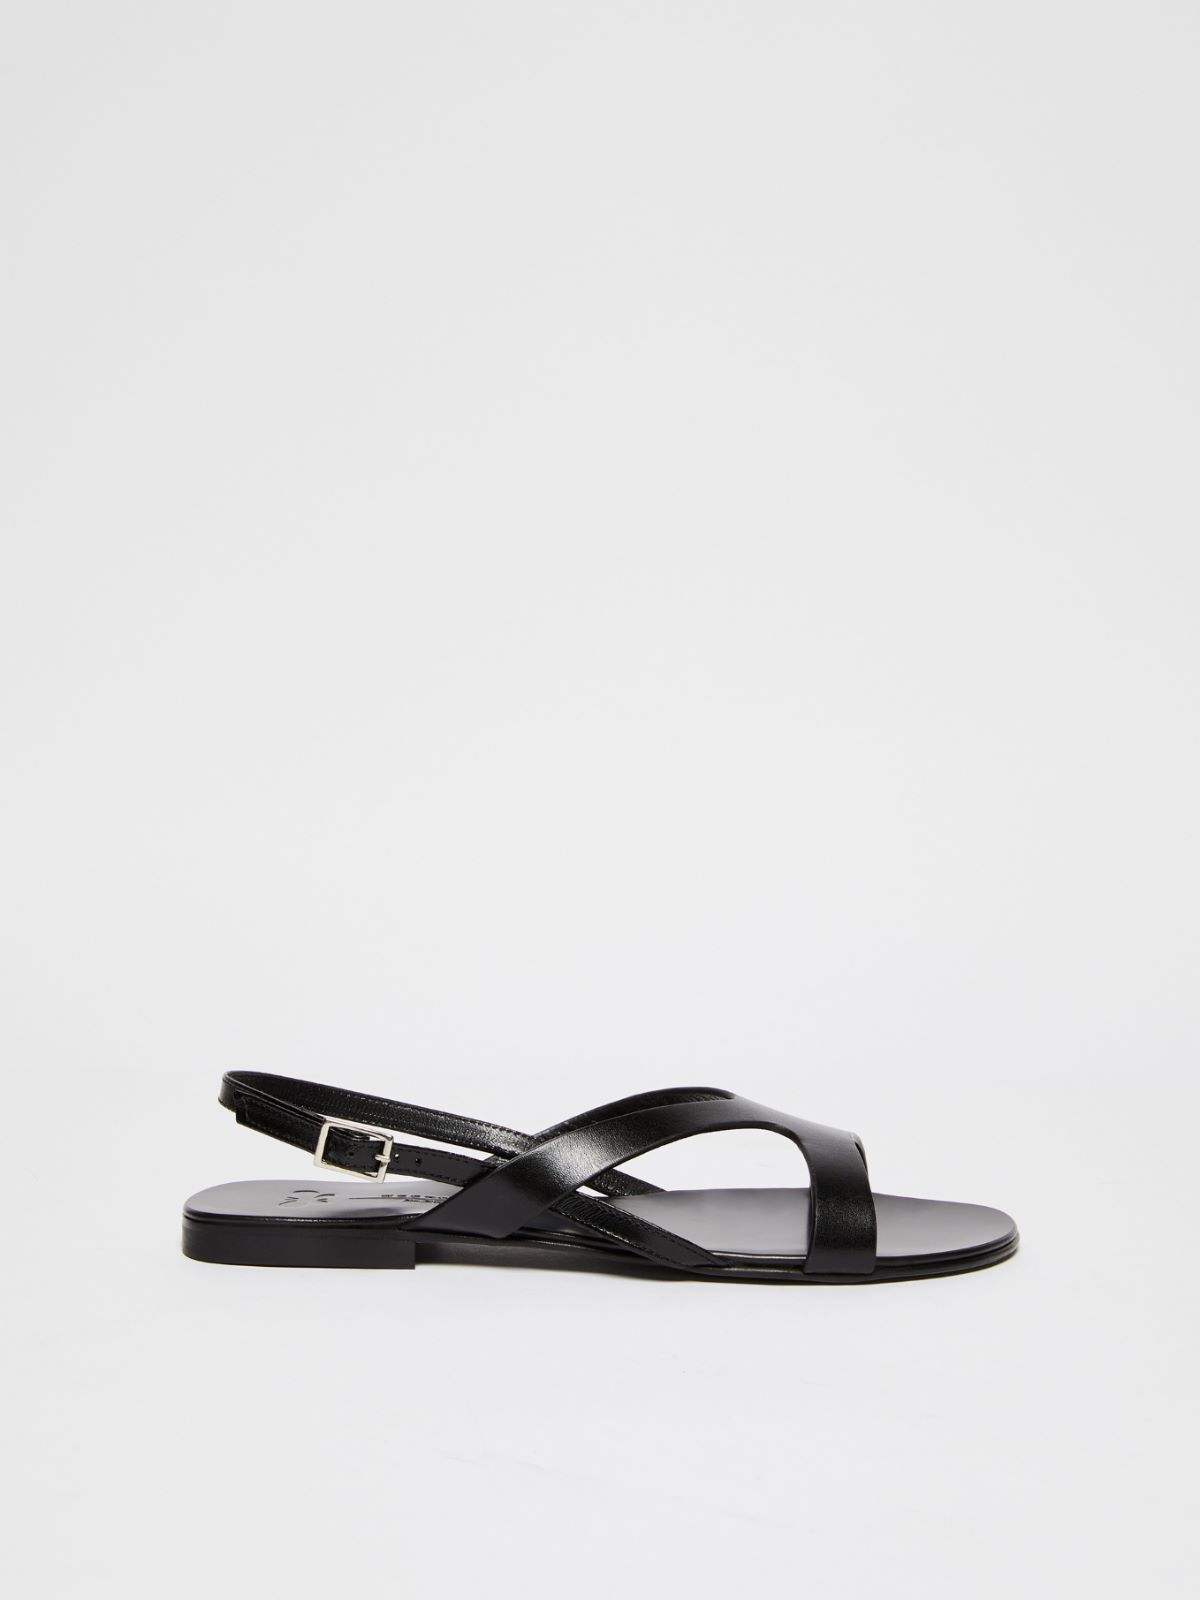 Flat leather sandals, black | Weekend Max Mara